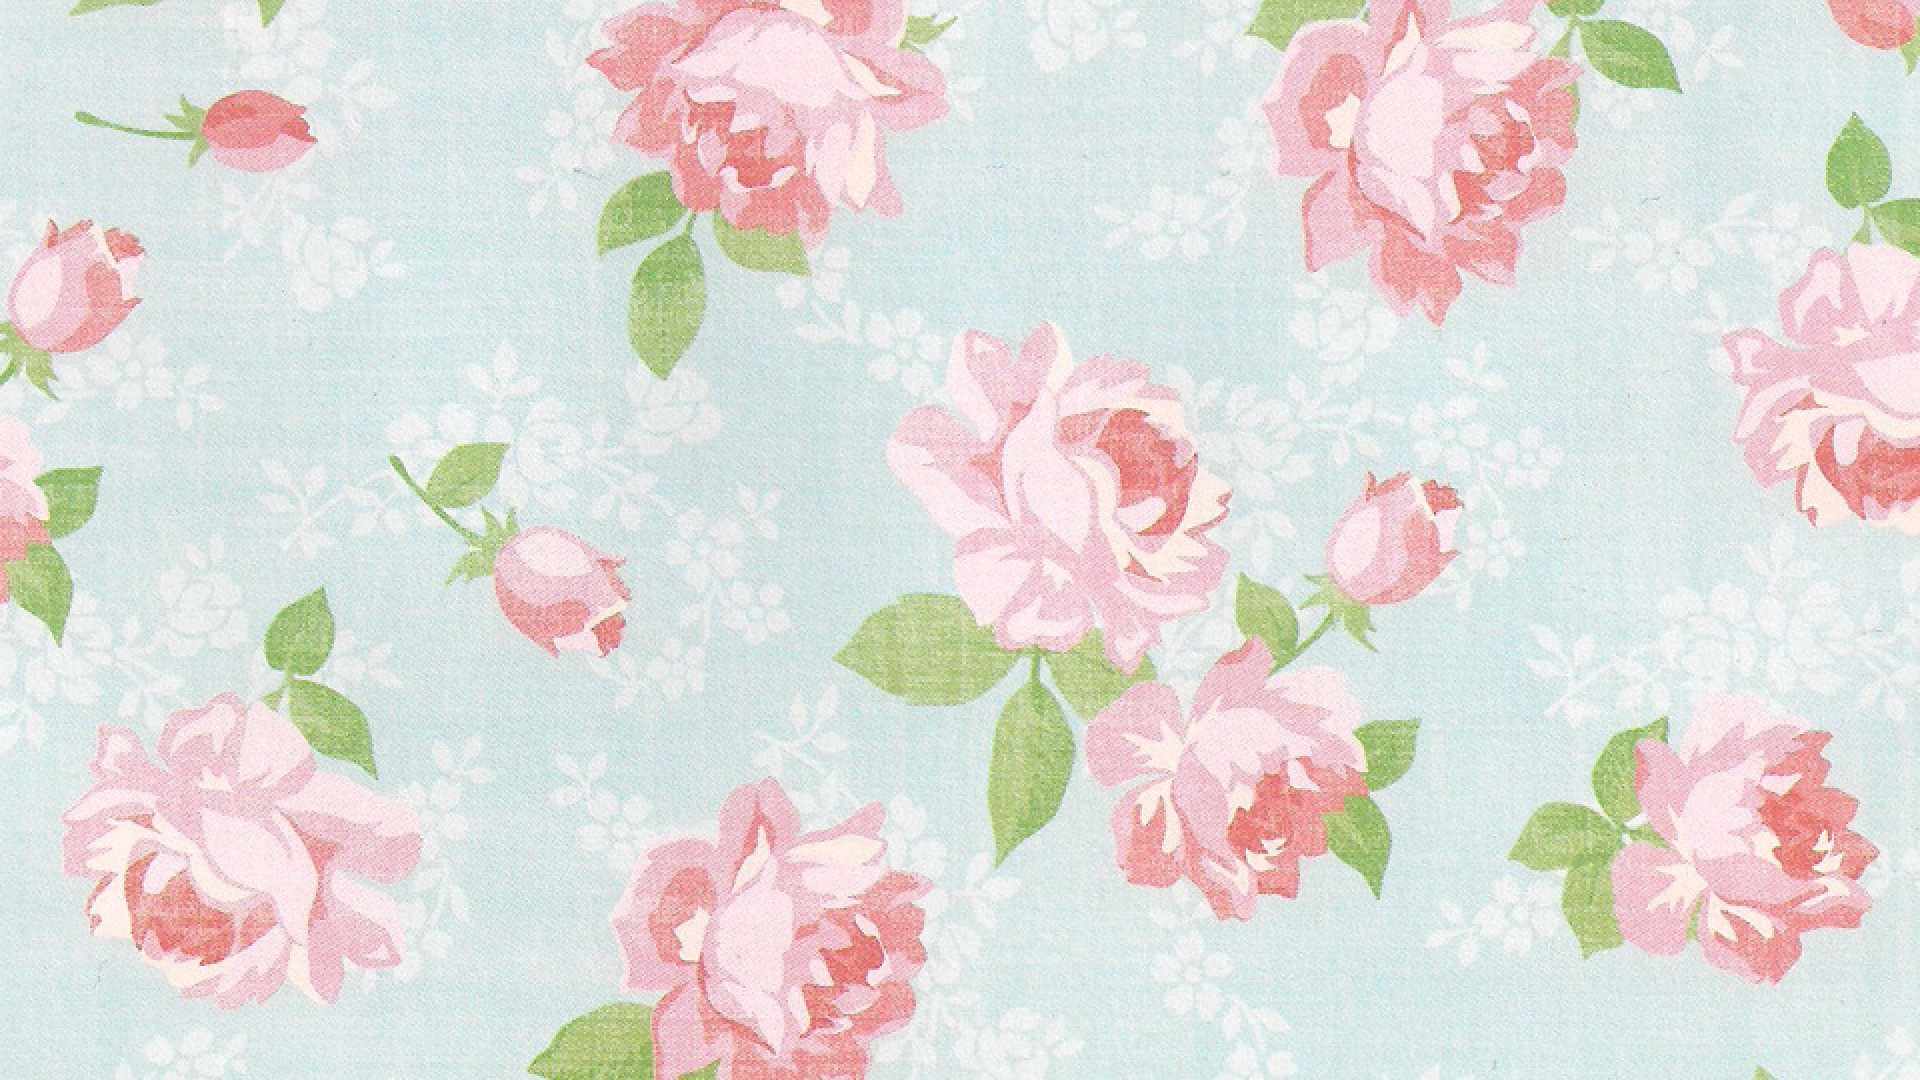 Floral wallpaper background